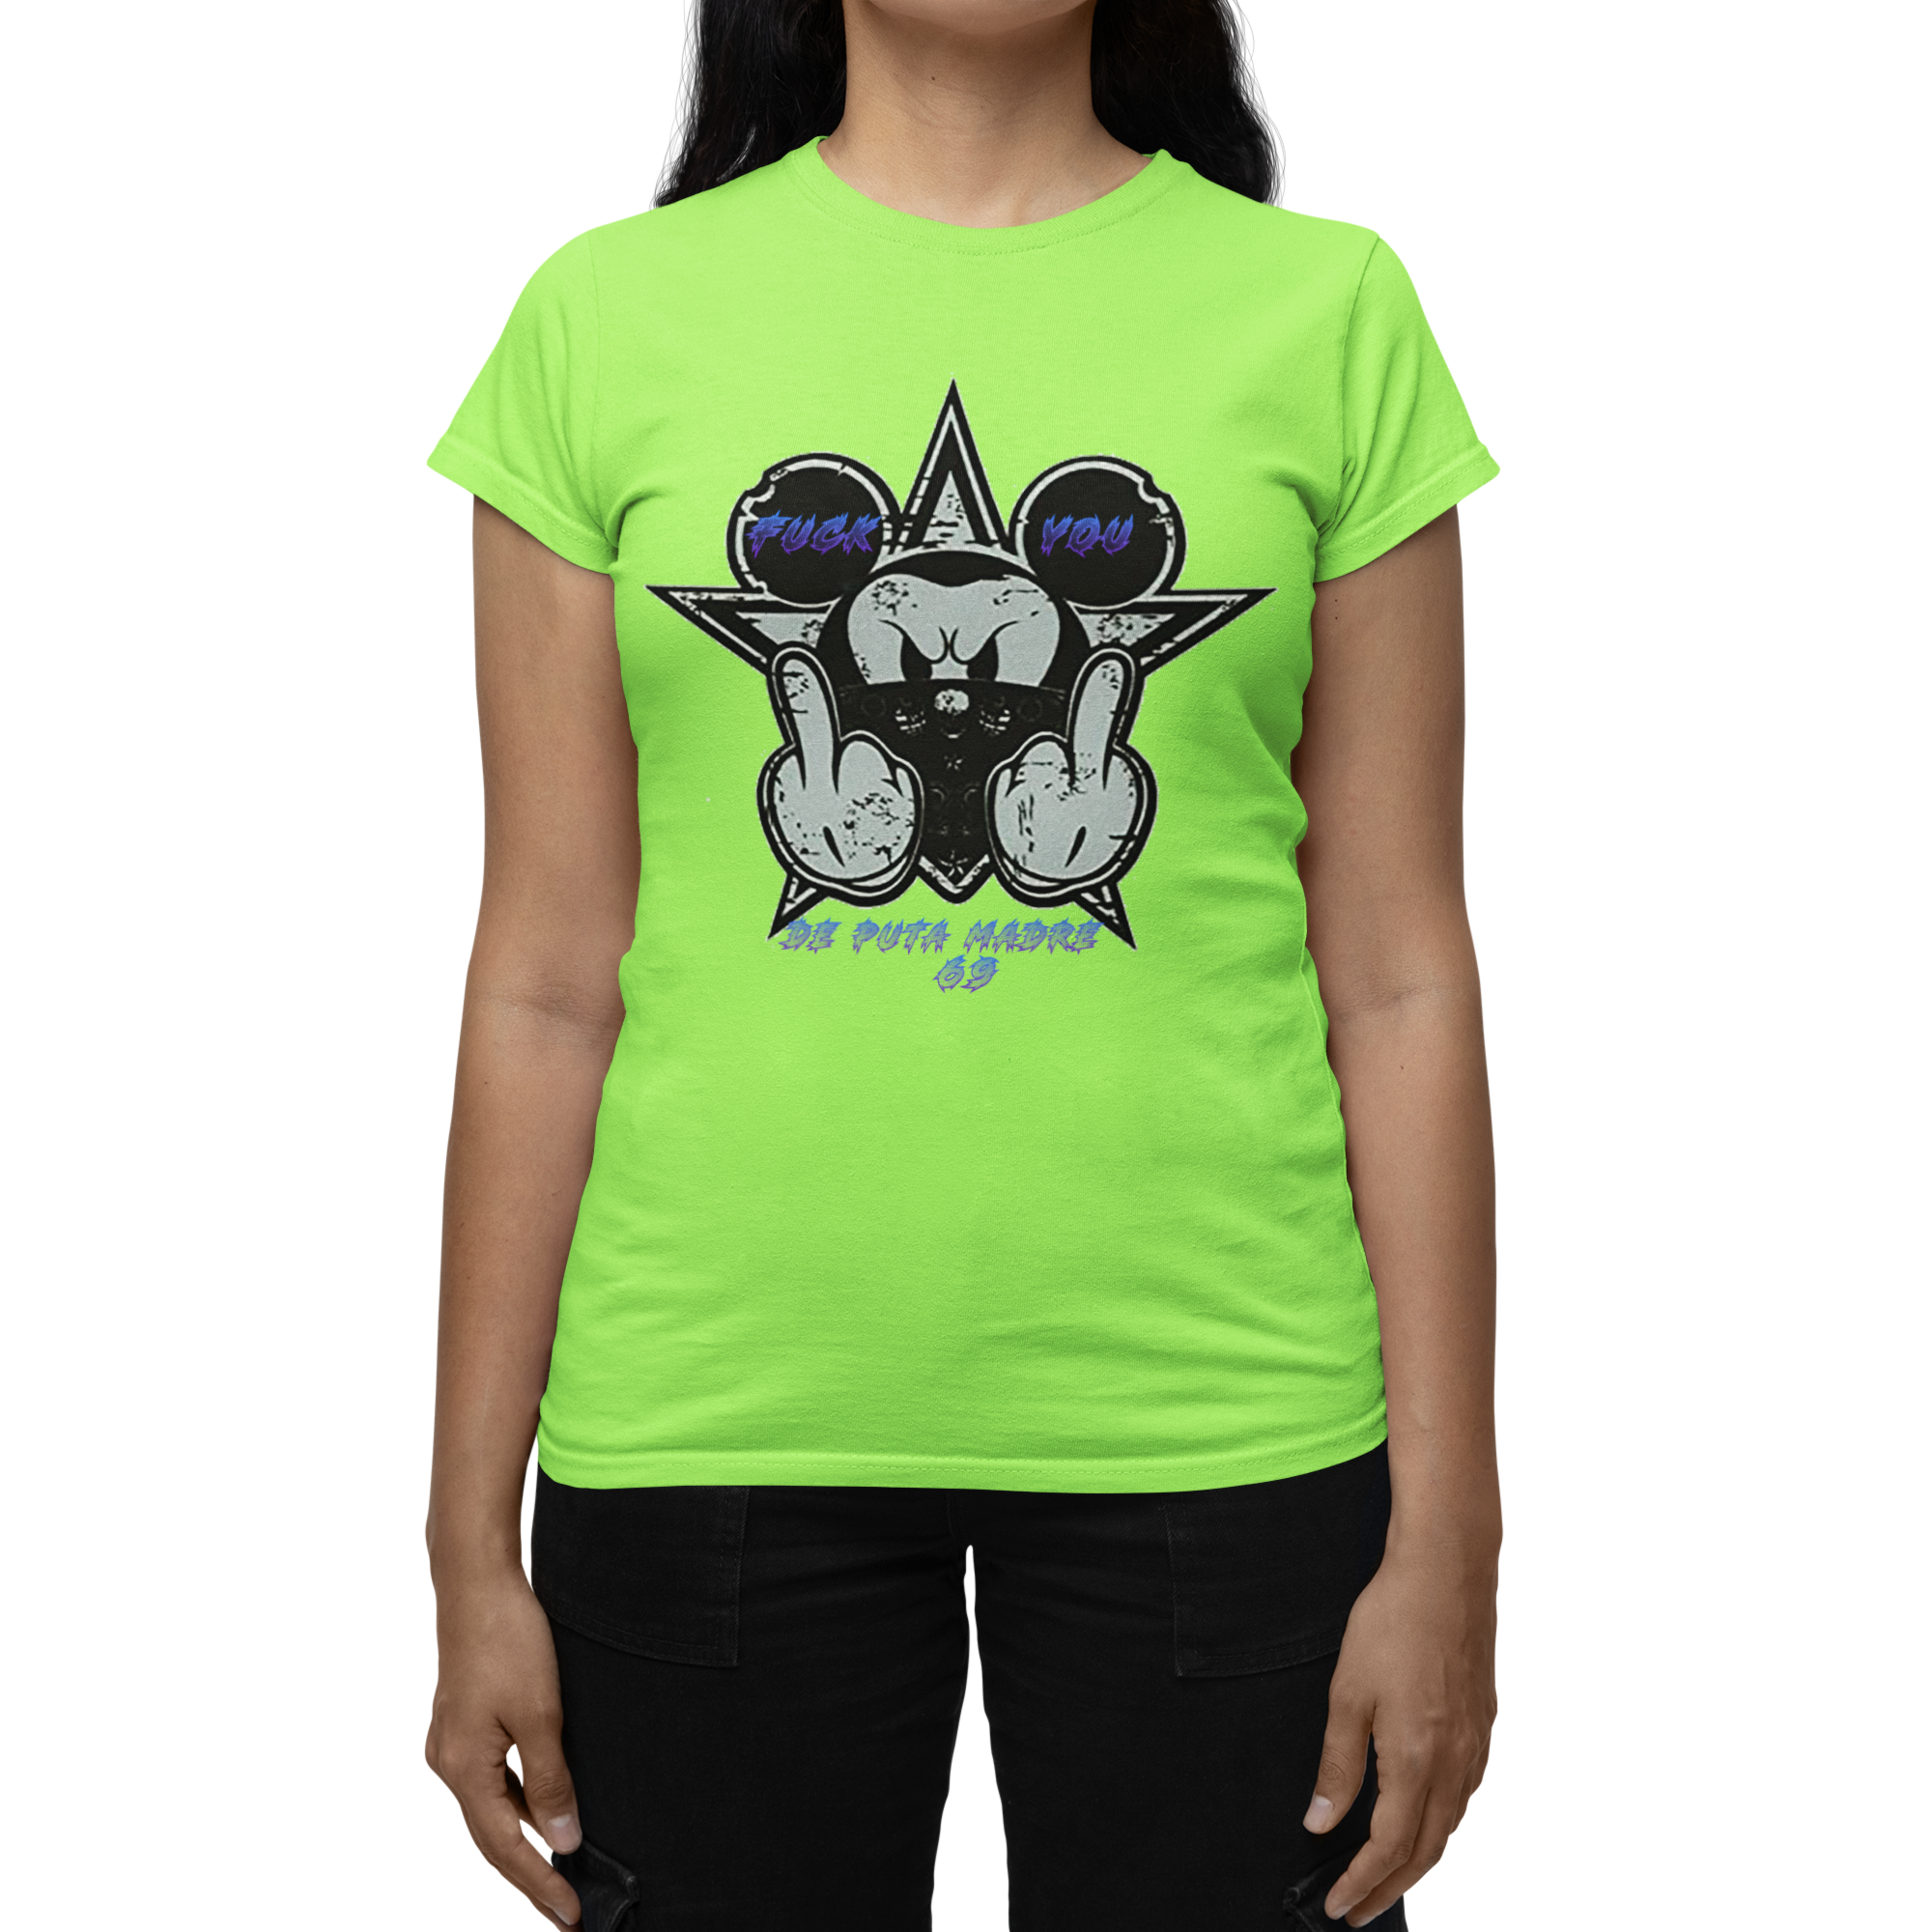 DPM69 Women's T-shirt F*ck you Mickey